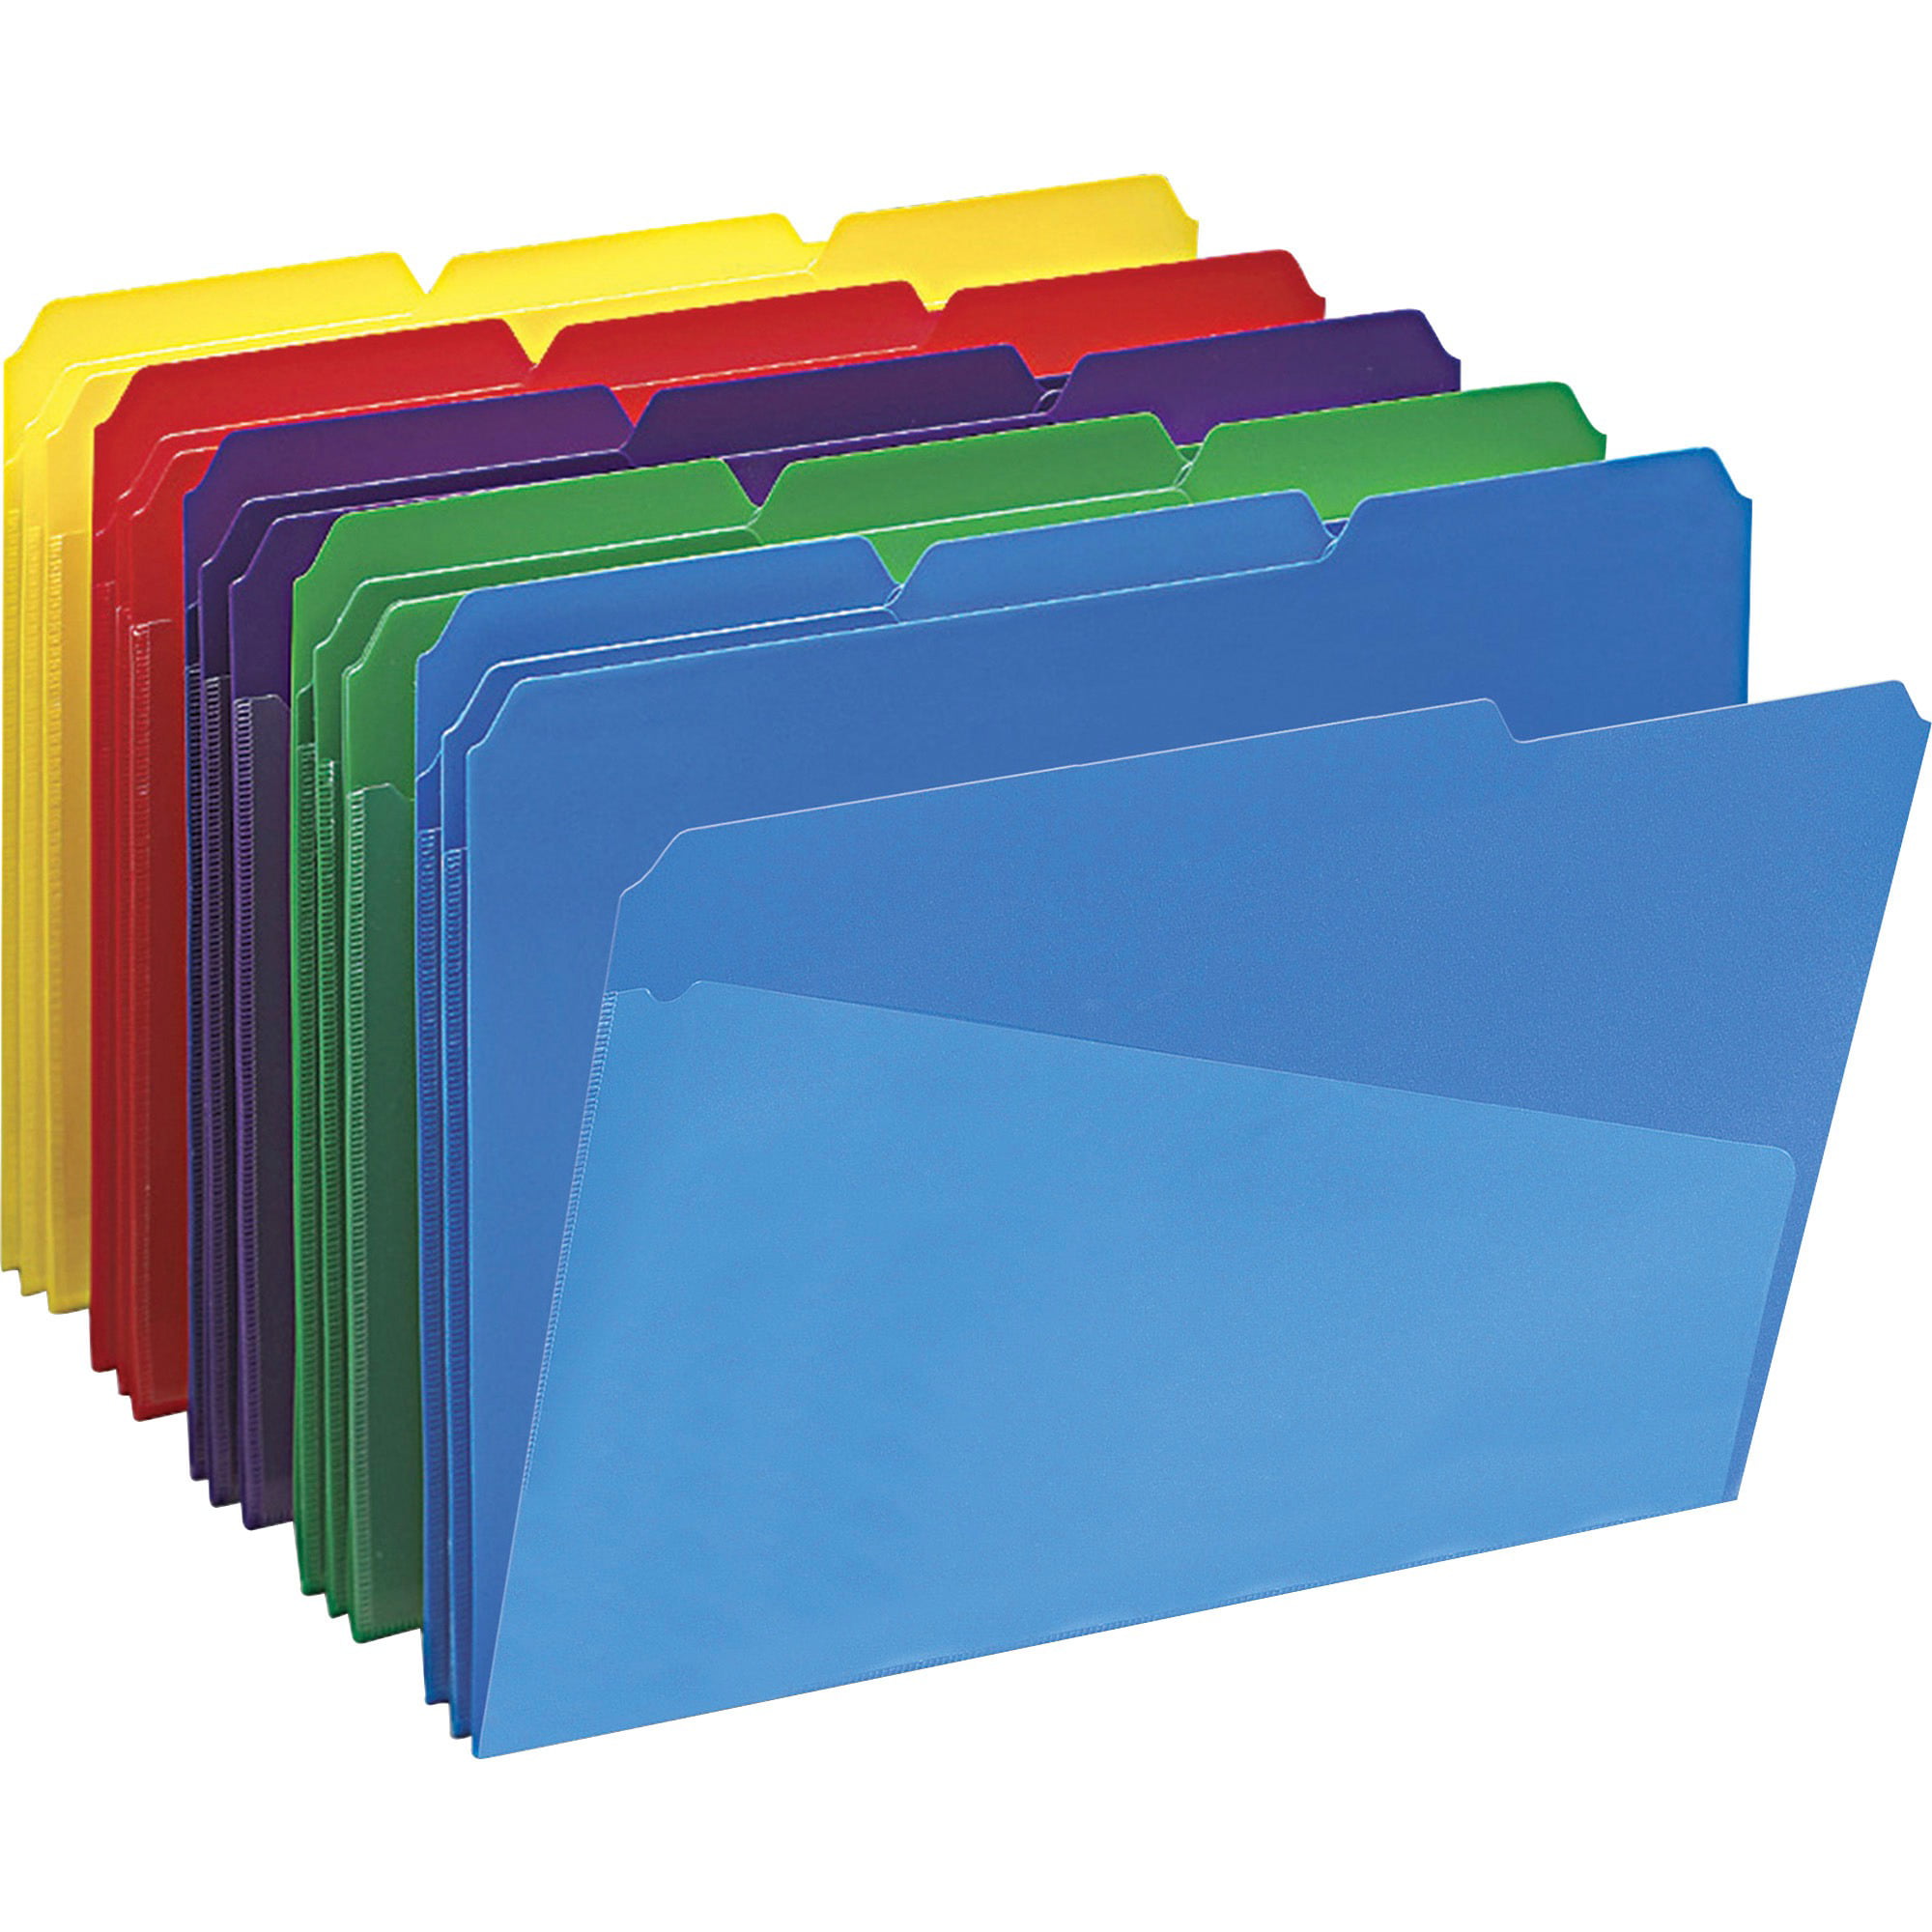 Folder support. Папка для бумаг. Цветные папки для бумаг. Папка для бумаг пластиковая. Папка для бумаг прозрачная.